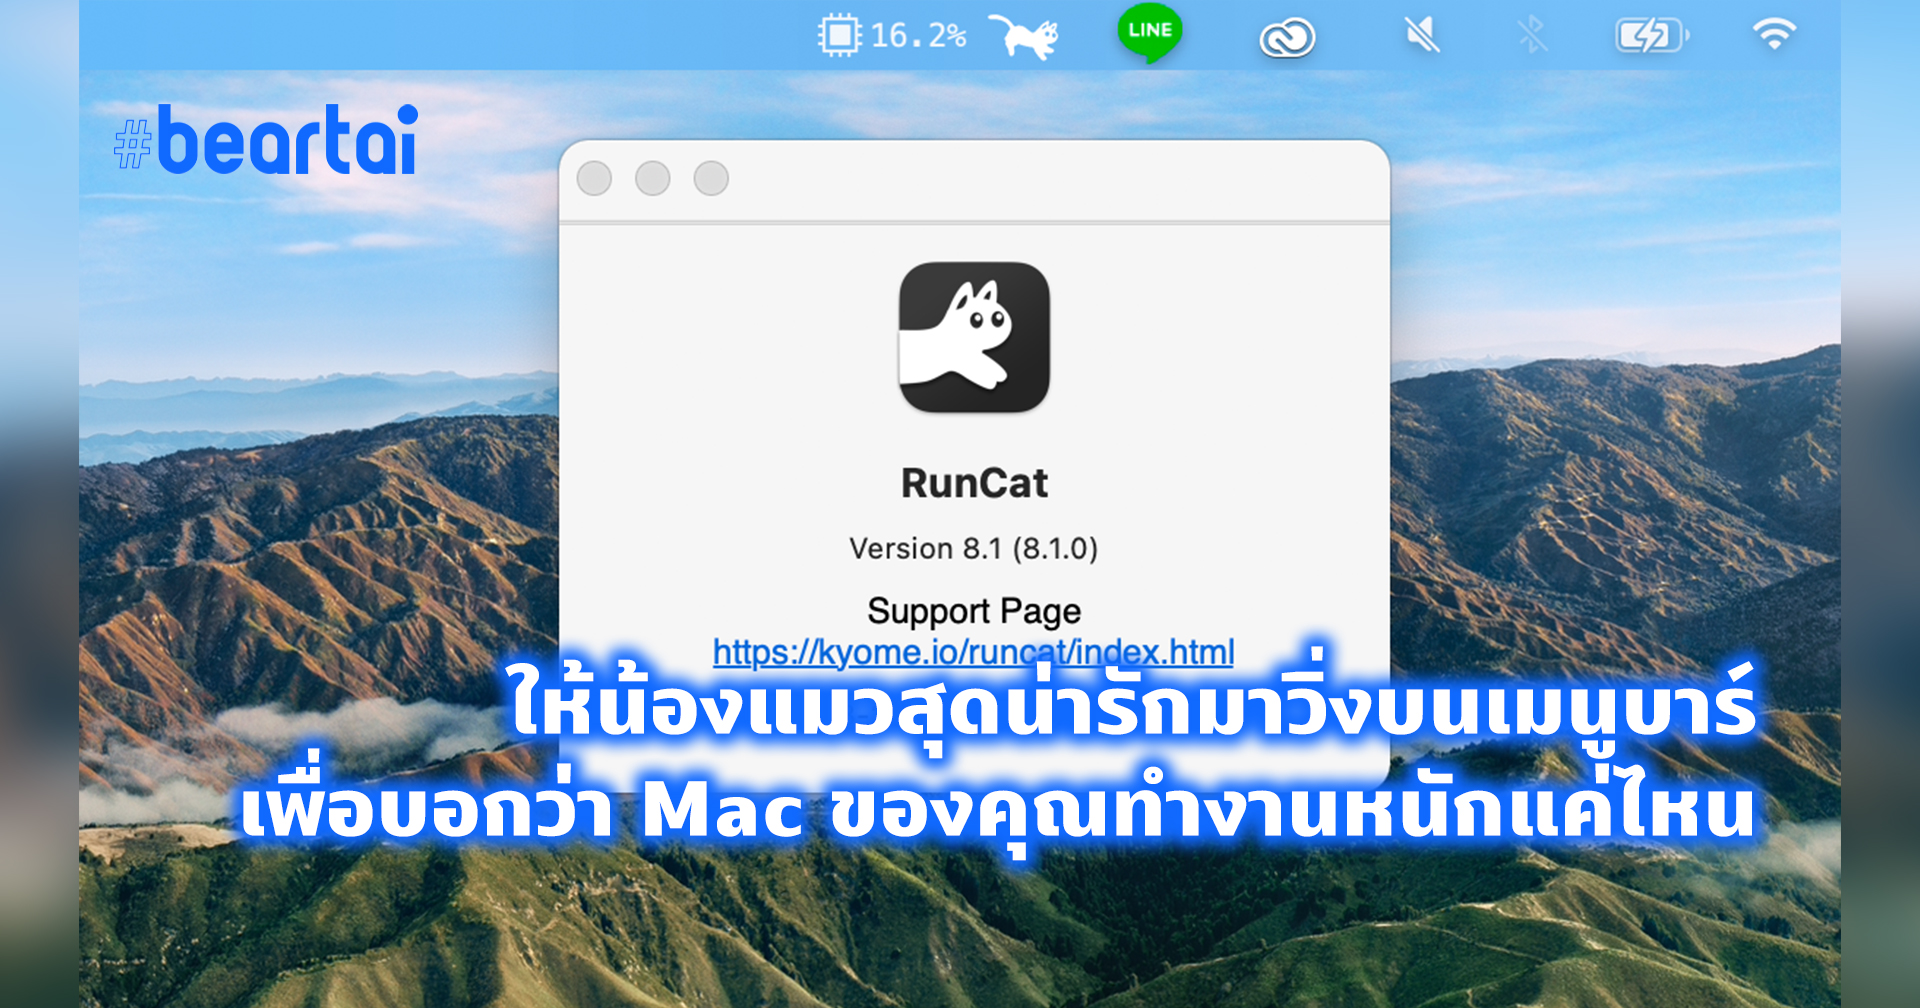 RunCat แอปน้องแมวสุดน่ารัก ที่จะวิ่งเร็วจี๋เมื่อ Mac ทำงานหนัก!